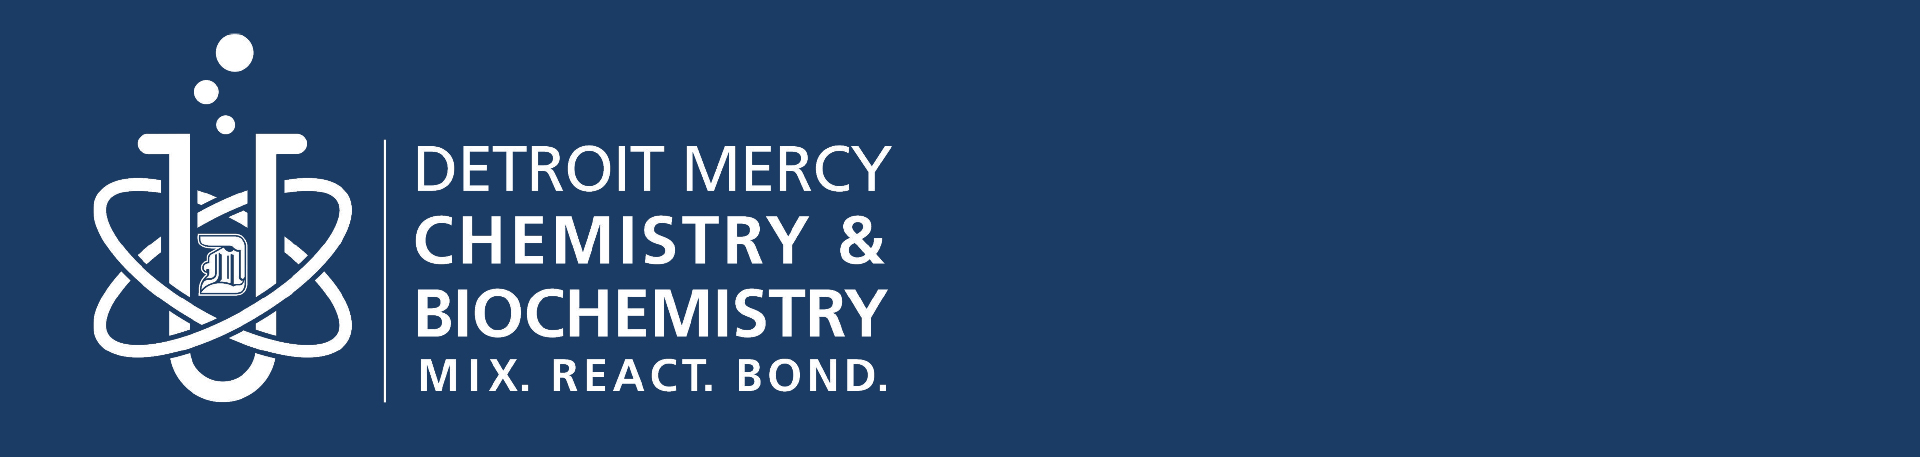 BioChem flyer that displays the Detroit Chemistry & Biochemistry graphic identity with tagline, "Mix. React. Bond."